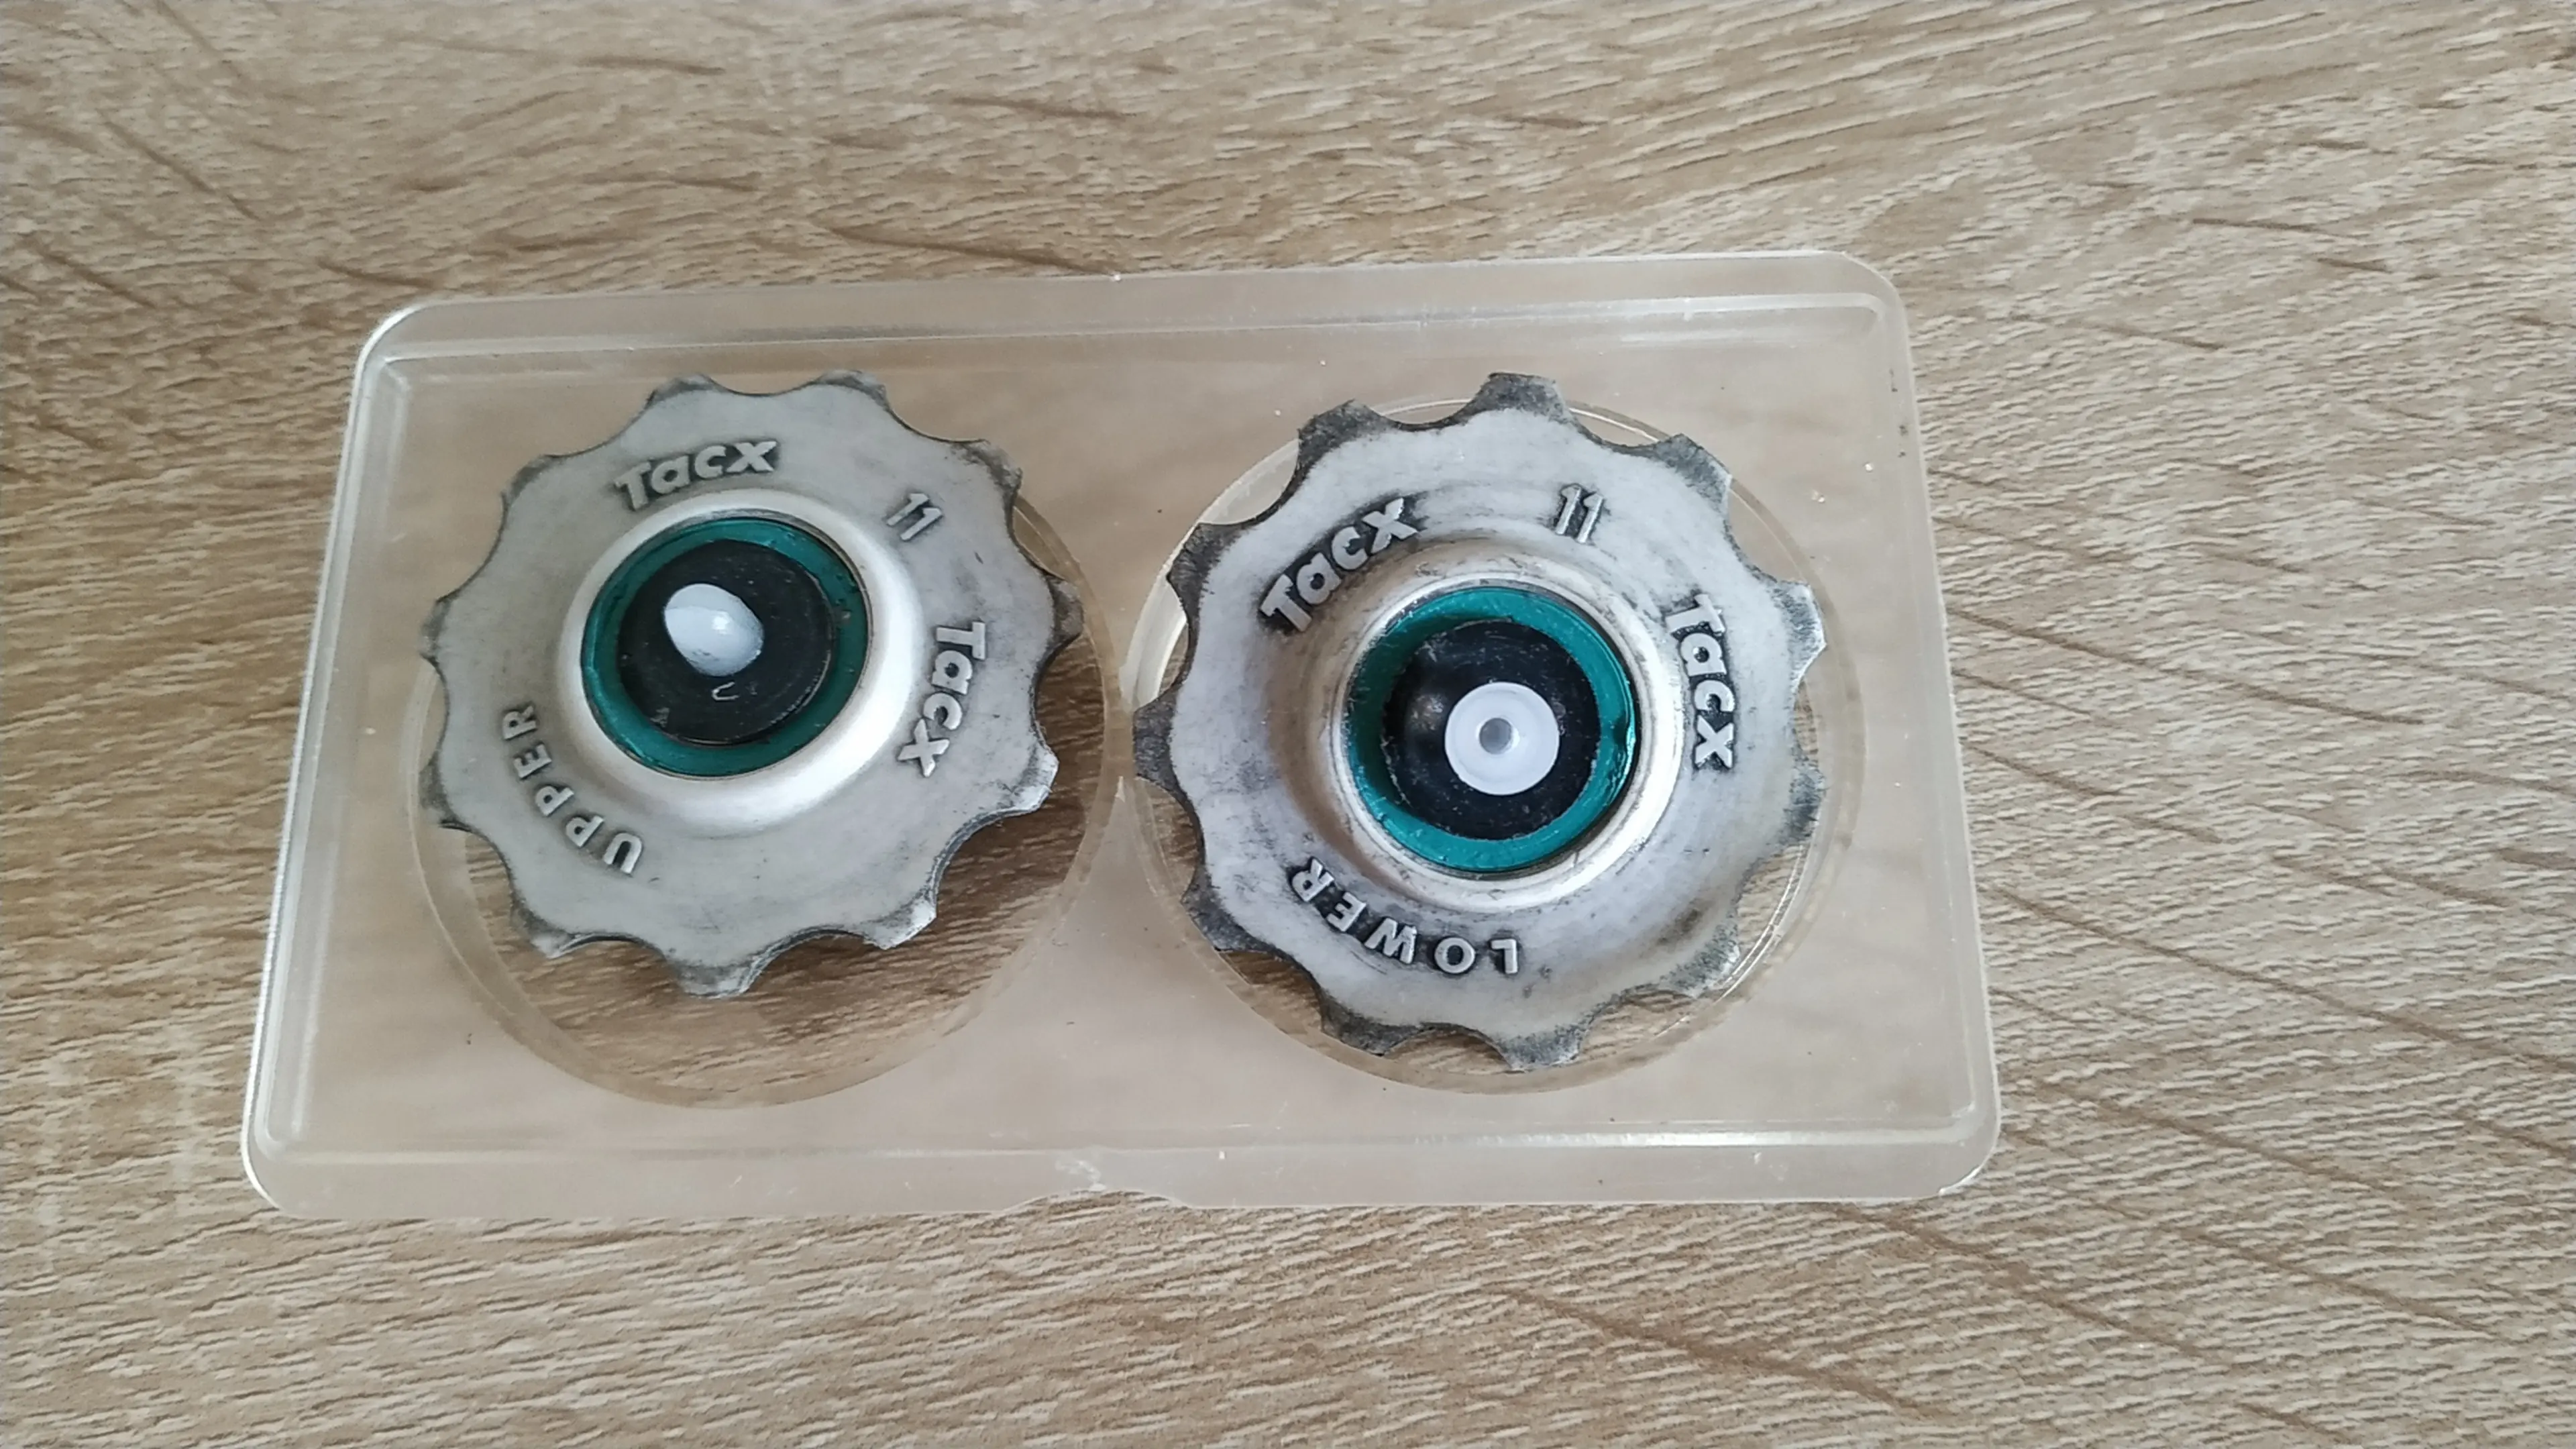 2. Rotite deraior/Jockey wheels ceramic ball bearings